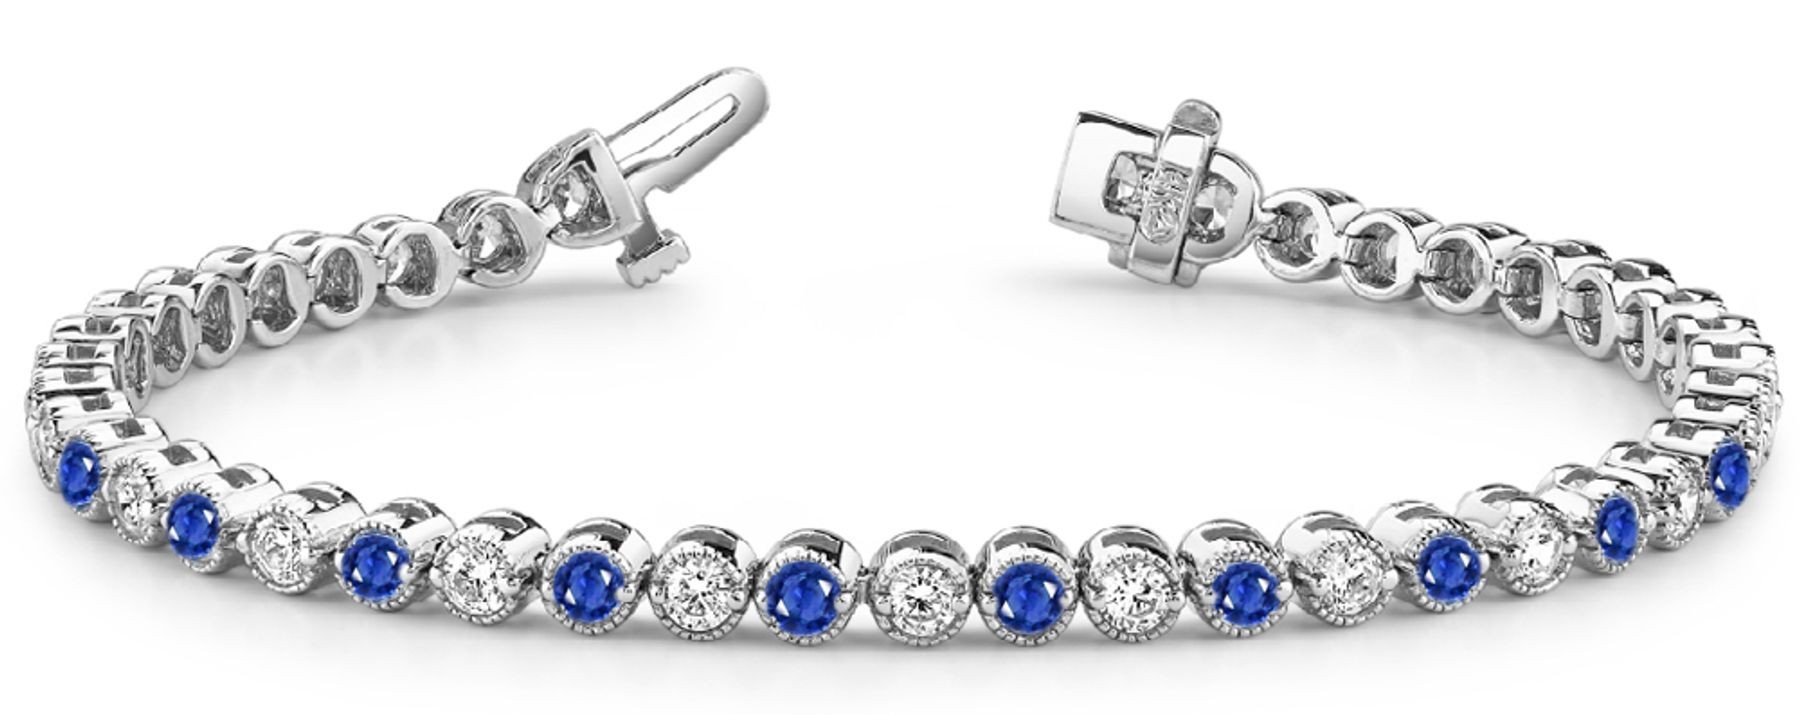 Sapphire & Diamond Link Bracelet Polished or Dull Finish